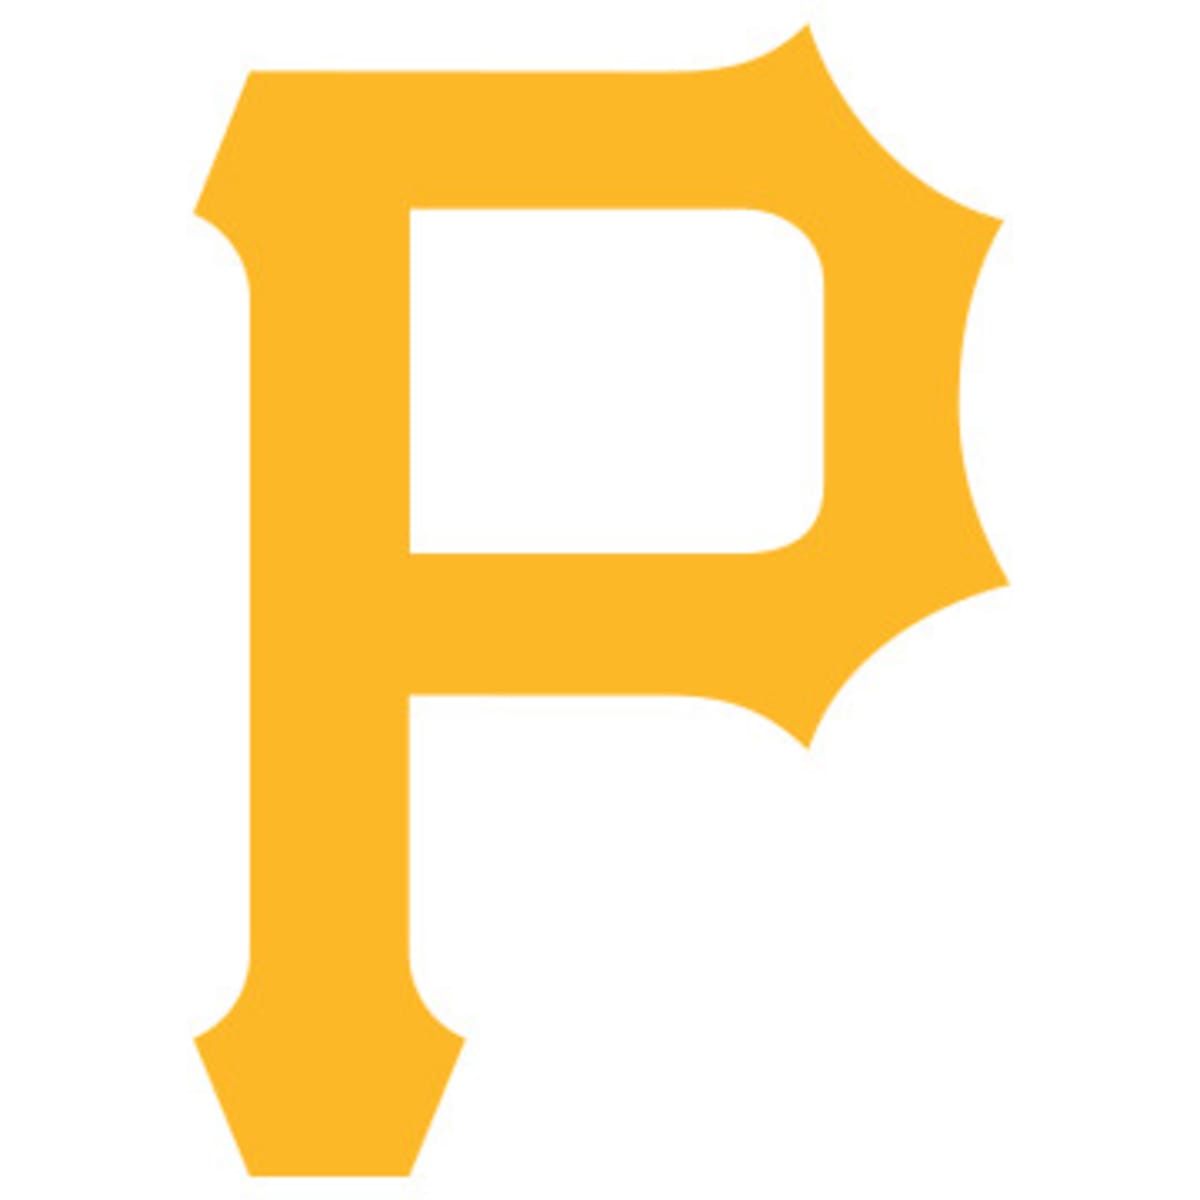 14 Pirate Baseball Font Images - Pittsburgh Pirates Number Font, Pittsburgh  Pirates Font and Pirates Baseball Font /